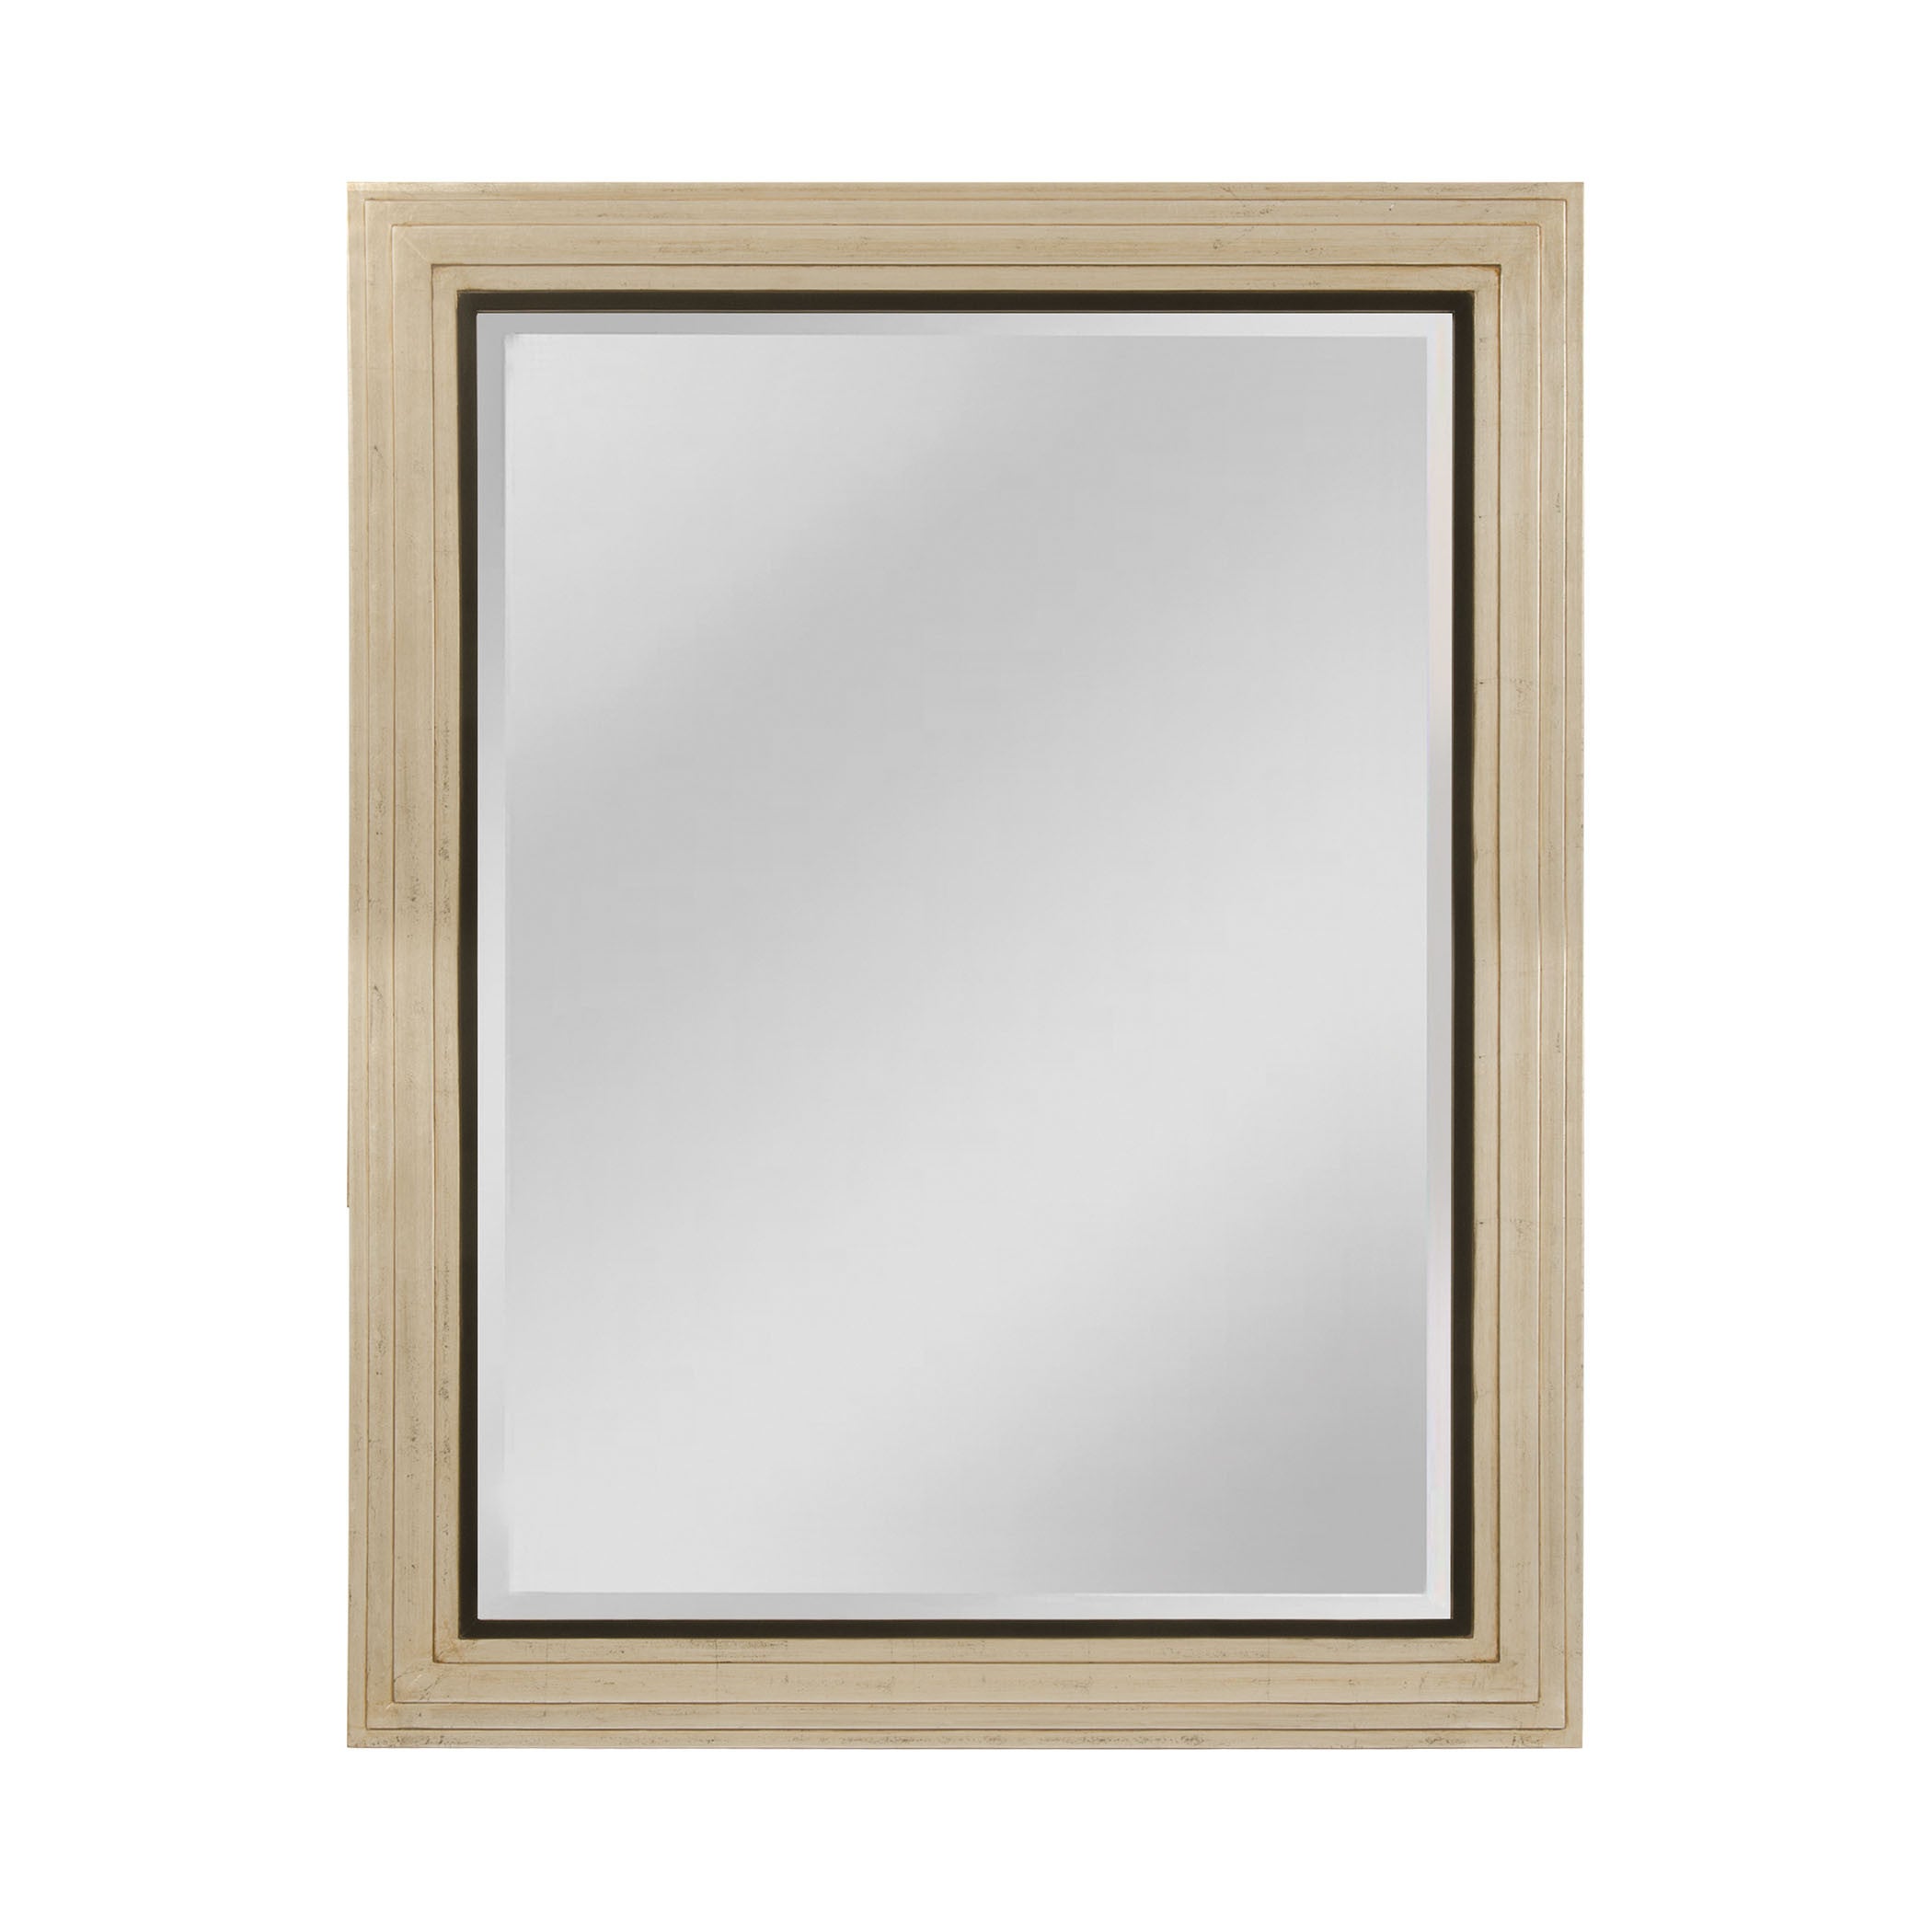 Mirror Masters Mw4069b-0057 Sheldon Collection Shining Silver,gold Mist,black Finish Wall Mirror